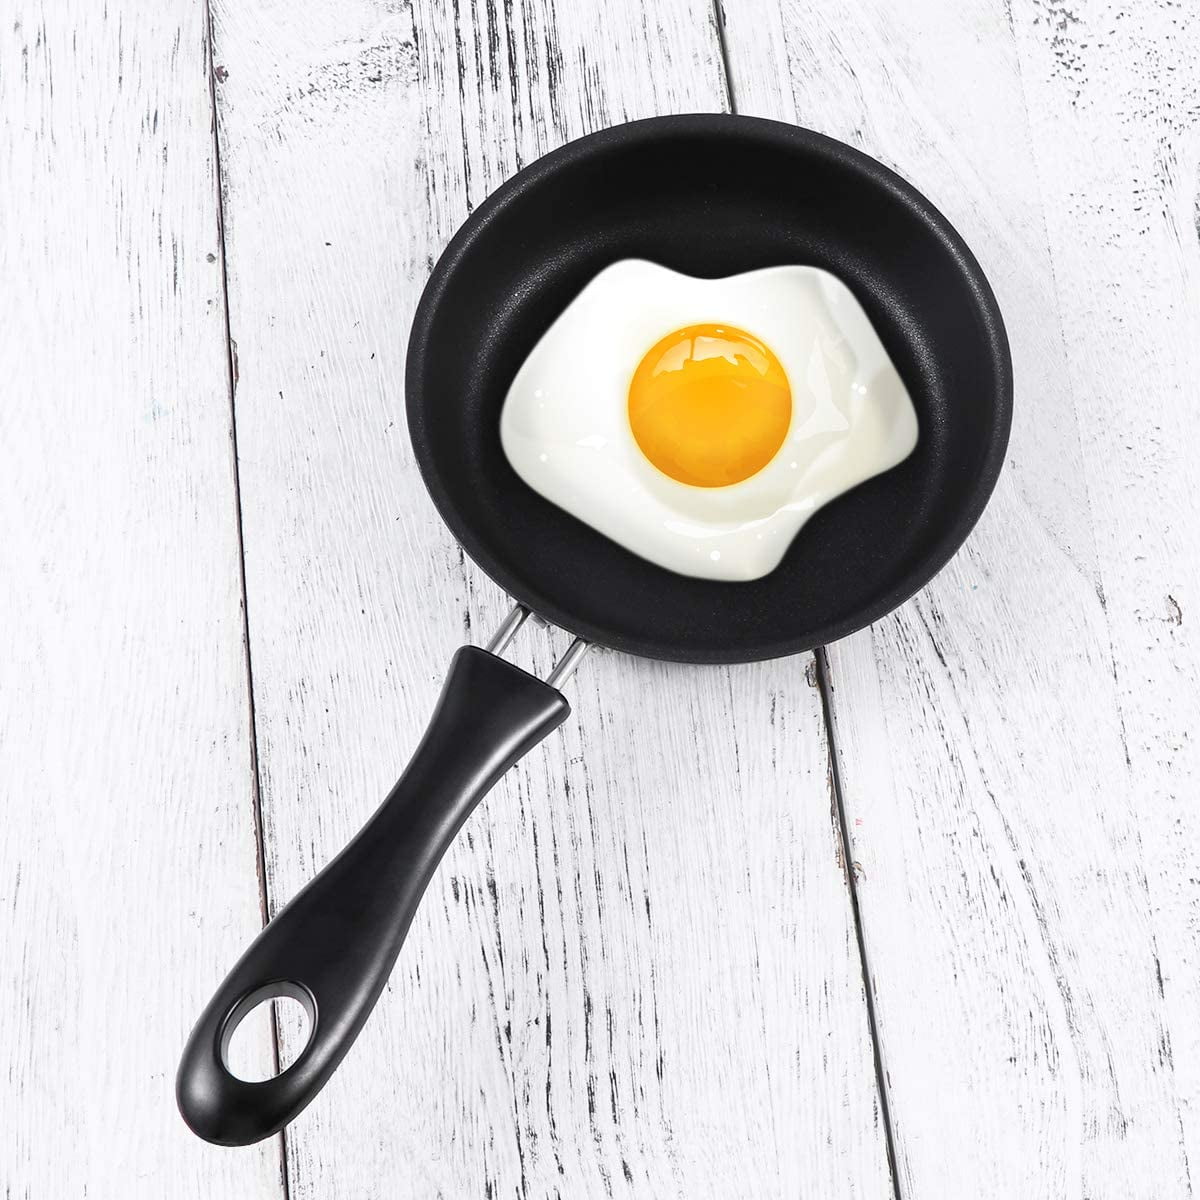 Demoyaya One Egg Frying Pan, Mini Induction Frying Eggs Pan, 4.7 Single Egg Durable Small Pan with Handle Heat Resistant Non Stick Pot, Portable